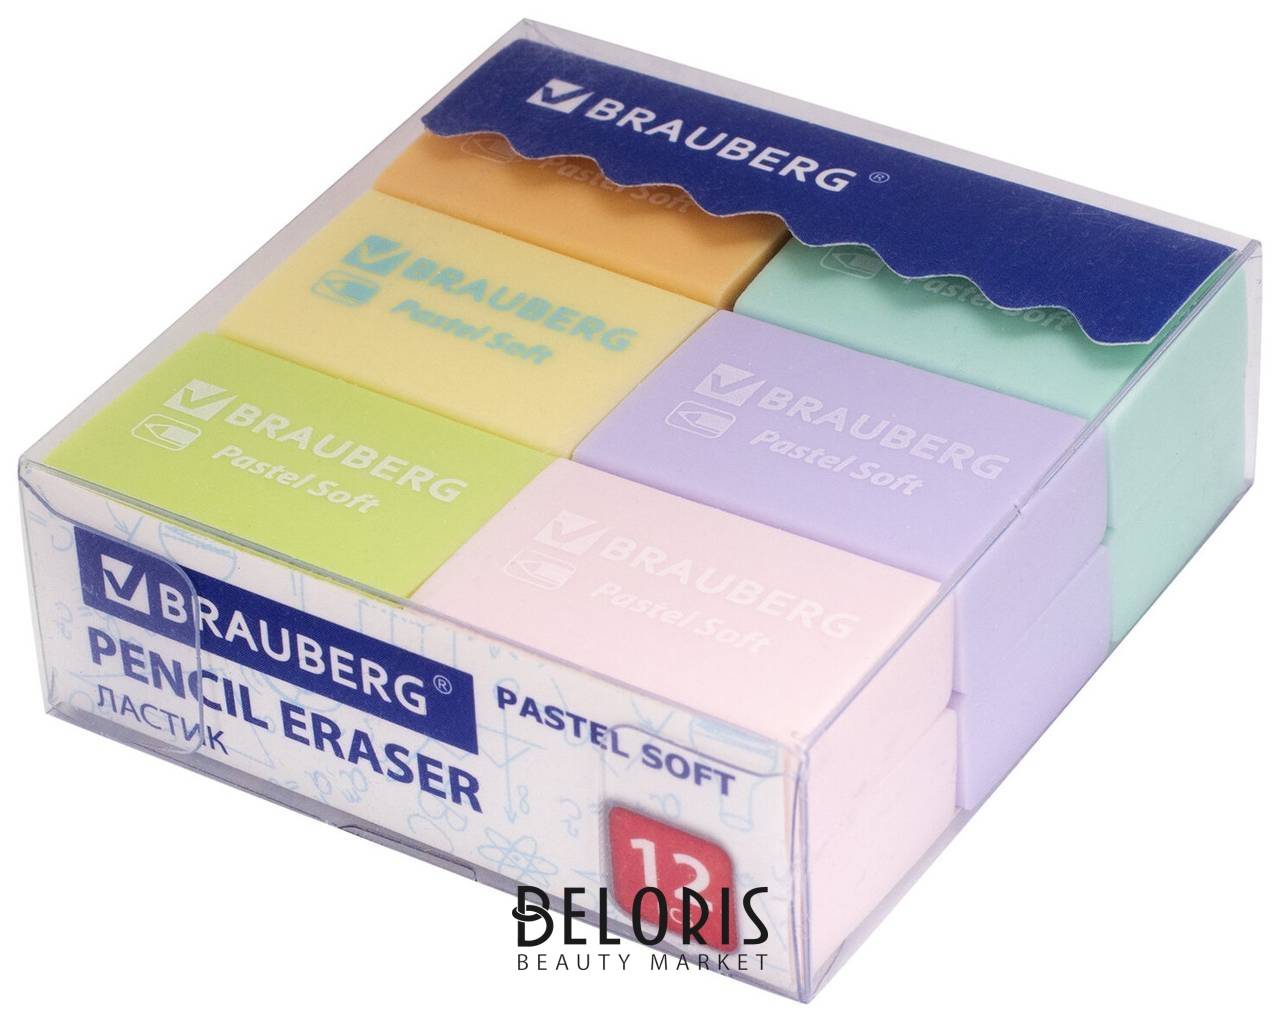 Ластики Brauberg Pastel Soft набор 12 шт., размер ластика 31х20х10 мм, экологичный пвх, 229598 Brauberg